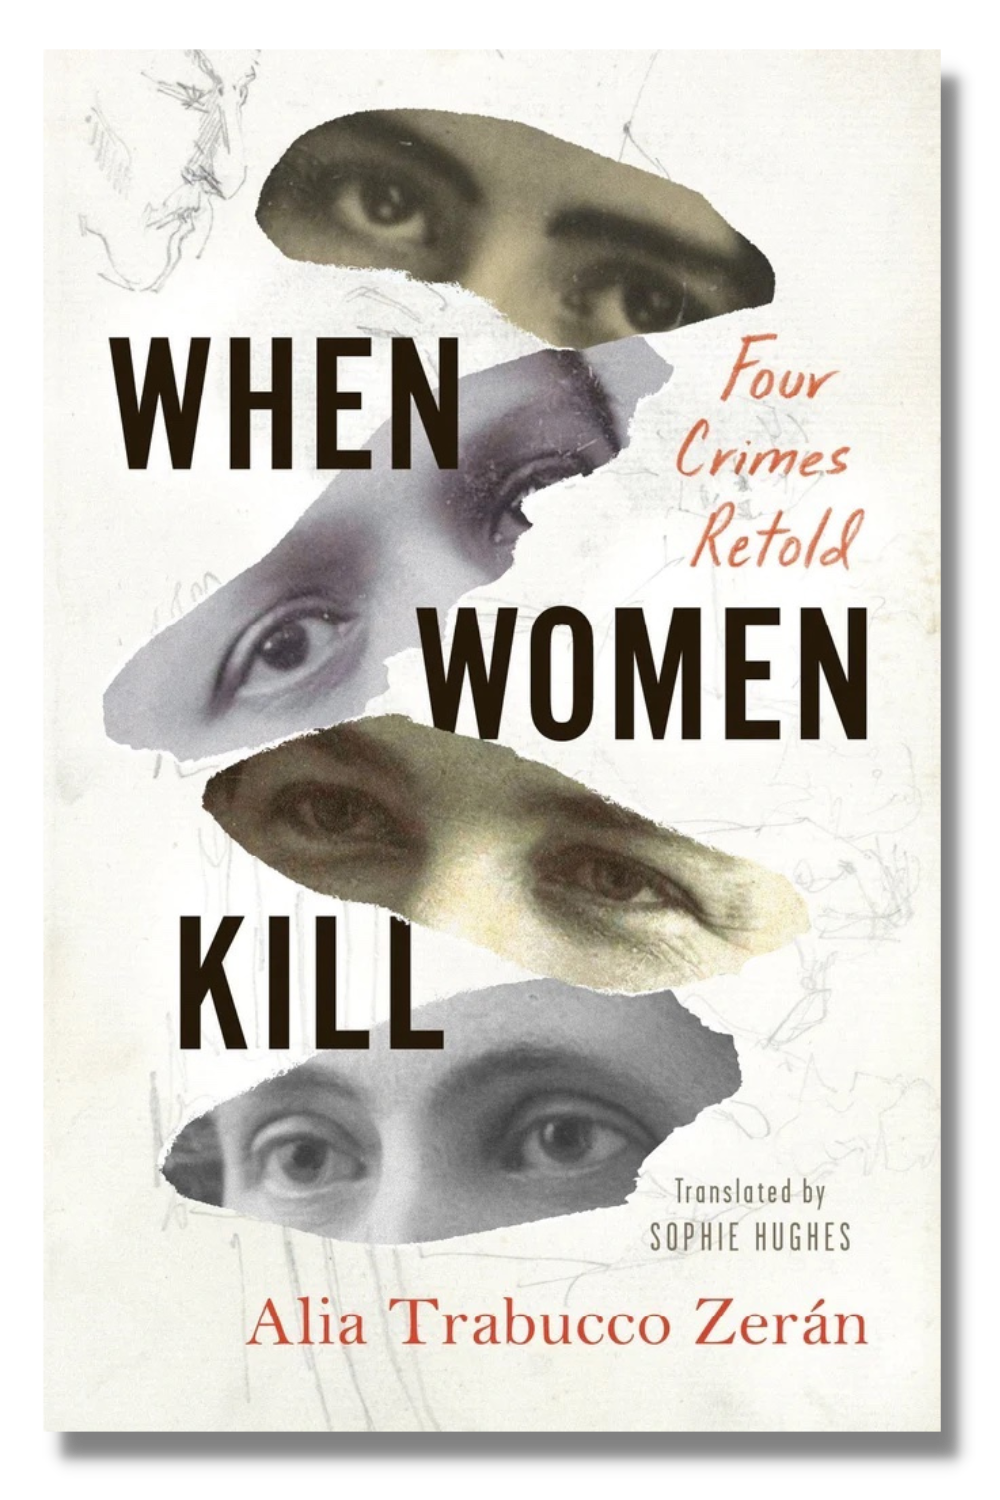 The cover of "When Women Kill"